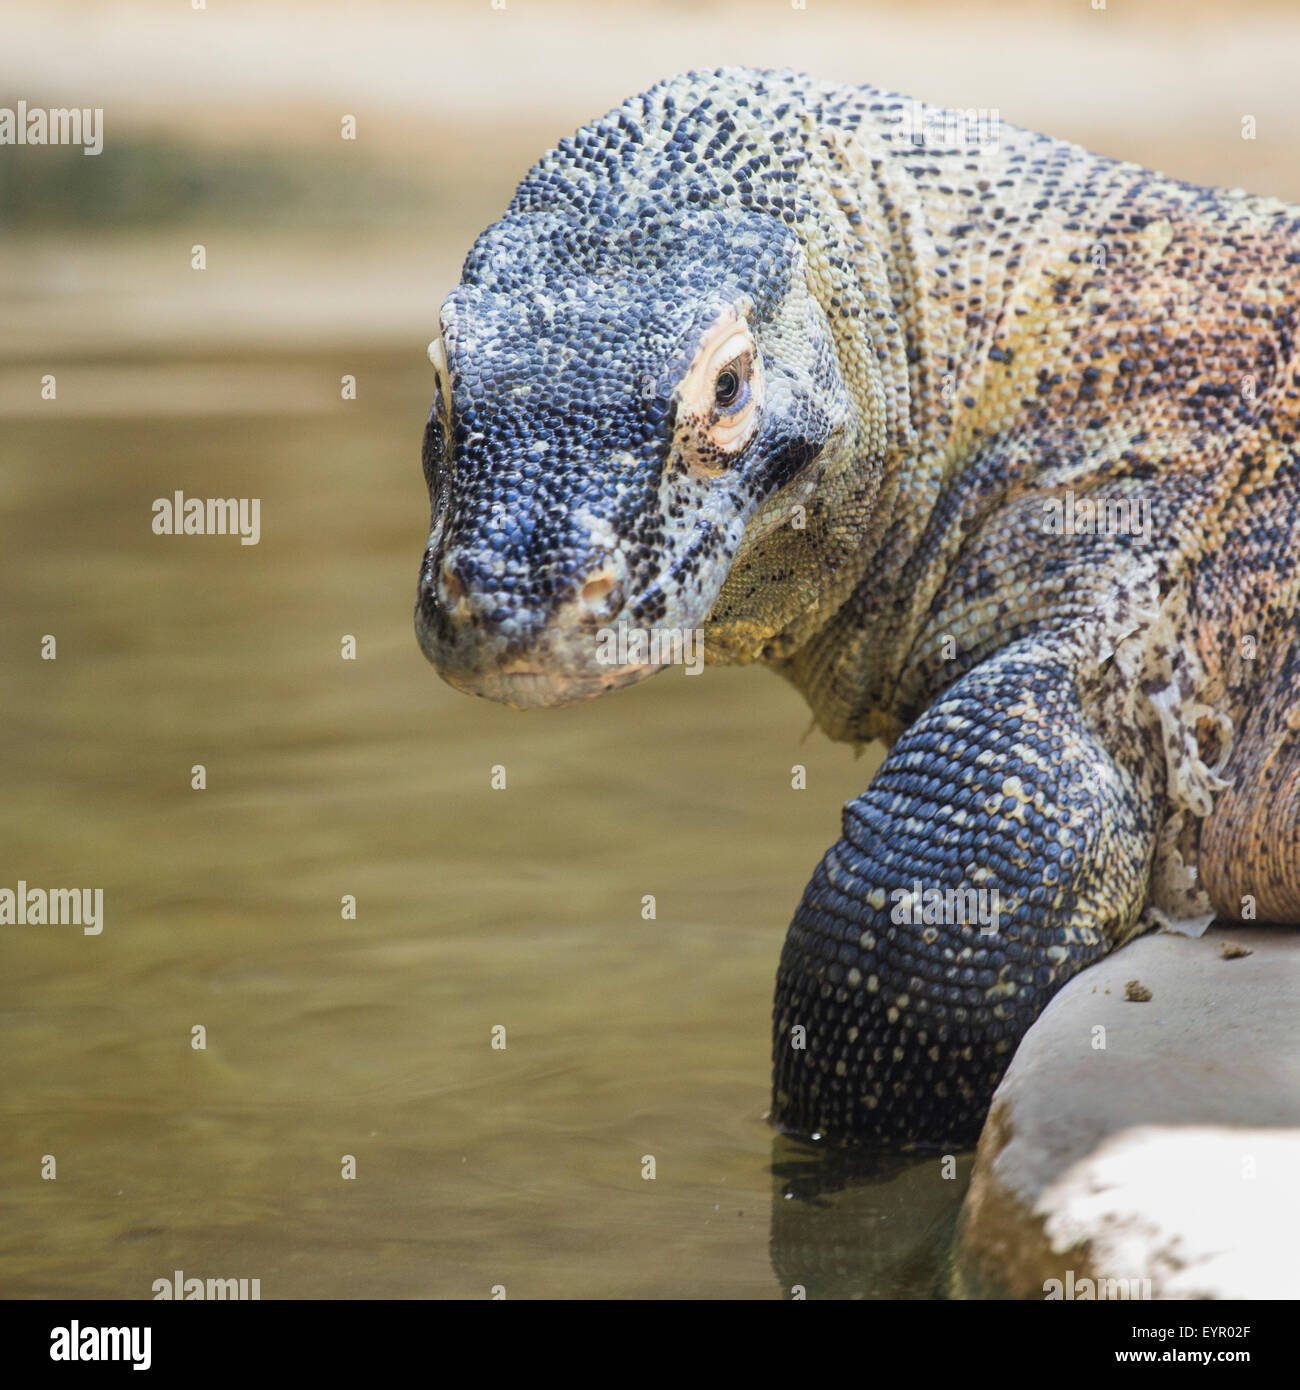 A large Komodo dragon, Varanus komodoensis, near the water is looking at the camera Stock Photo